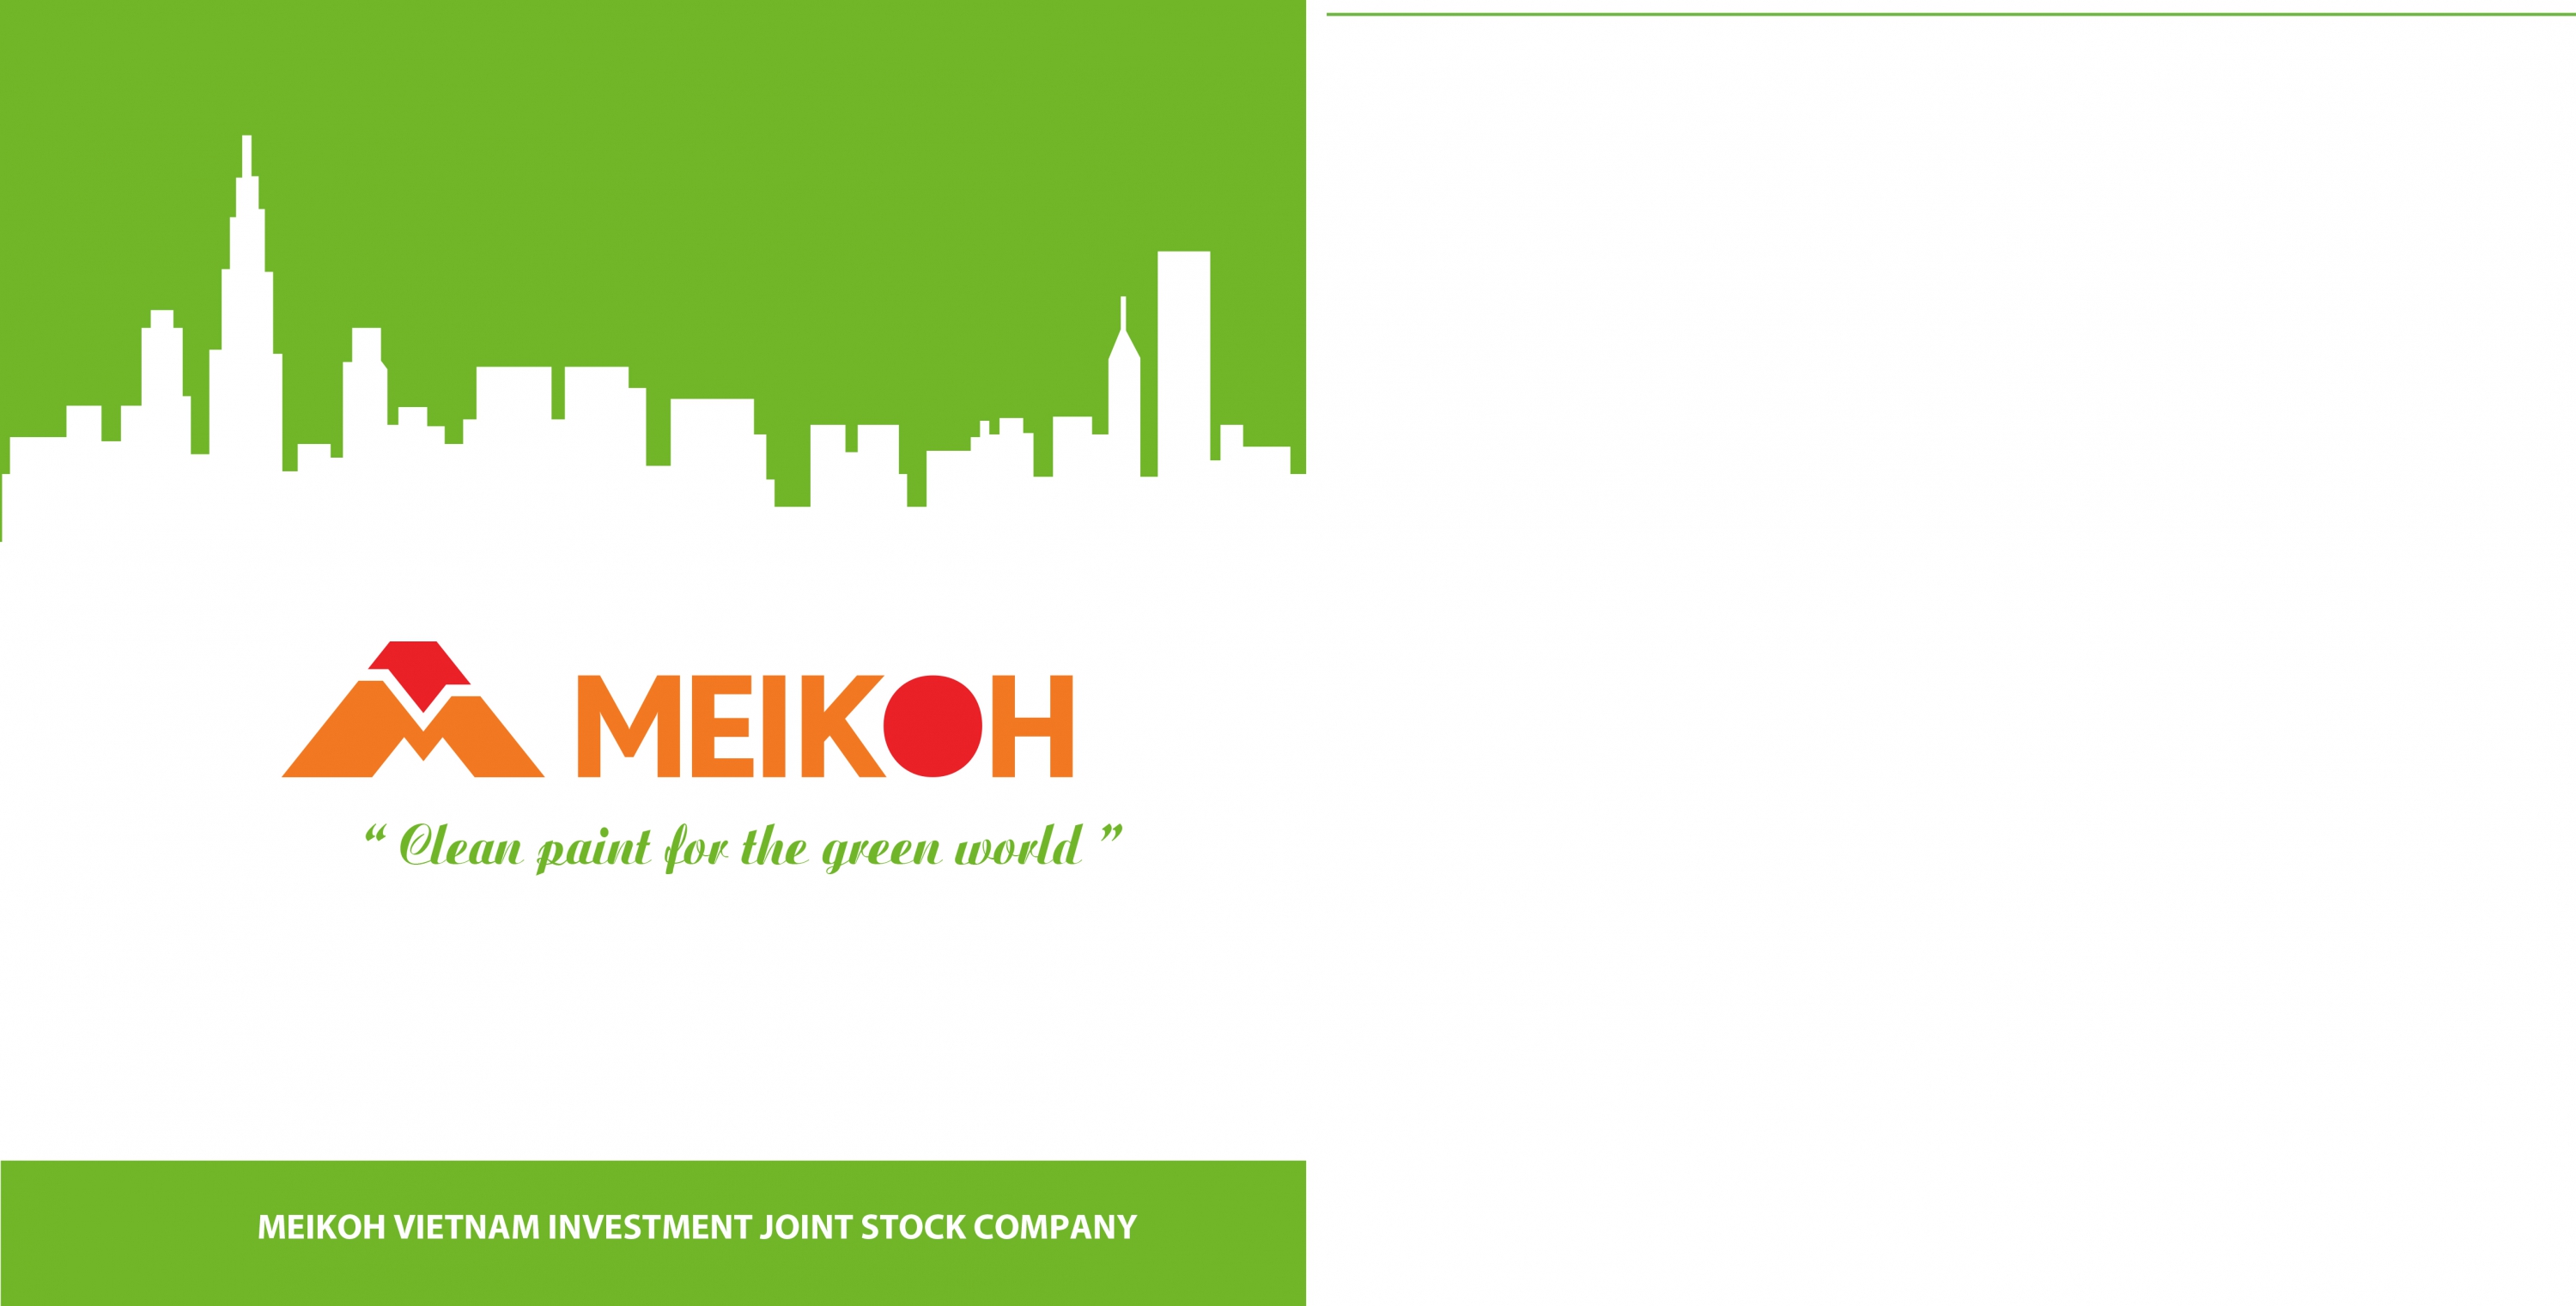 Profile Of Meikoh Vietnam Company